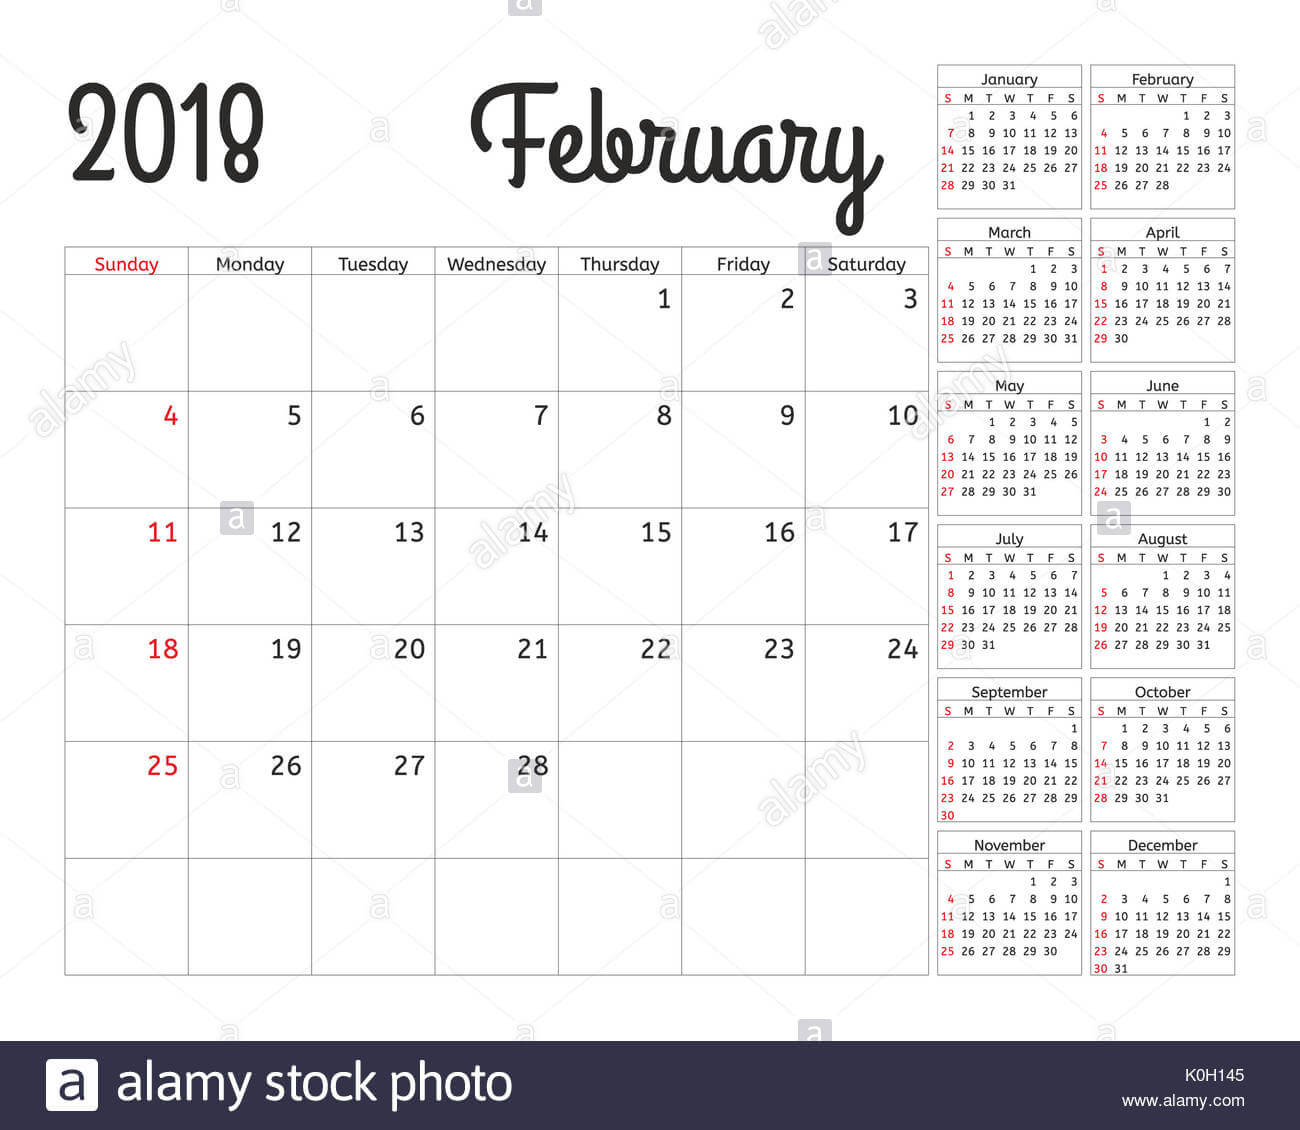 Simple Calendar Planner For 2018 Year. Calendar Planning In 12 Week Year Templates